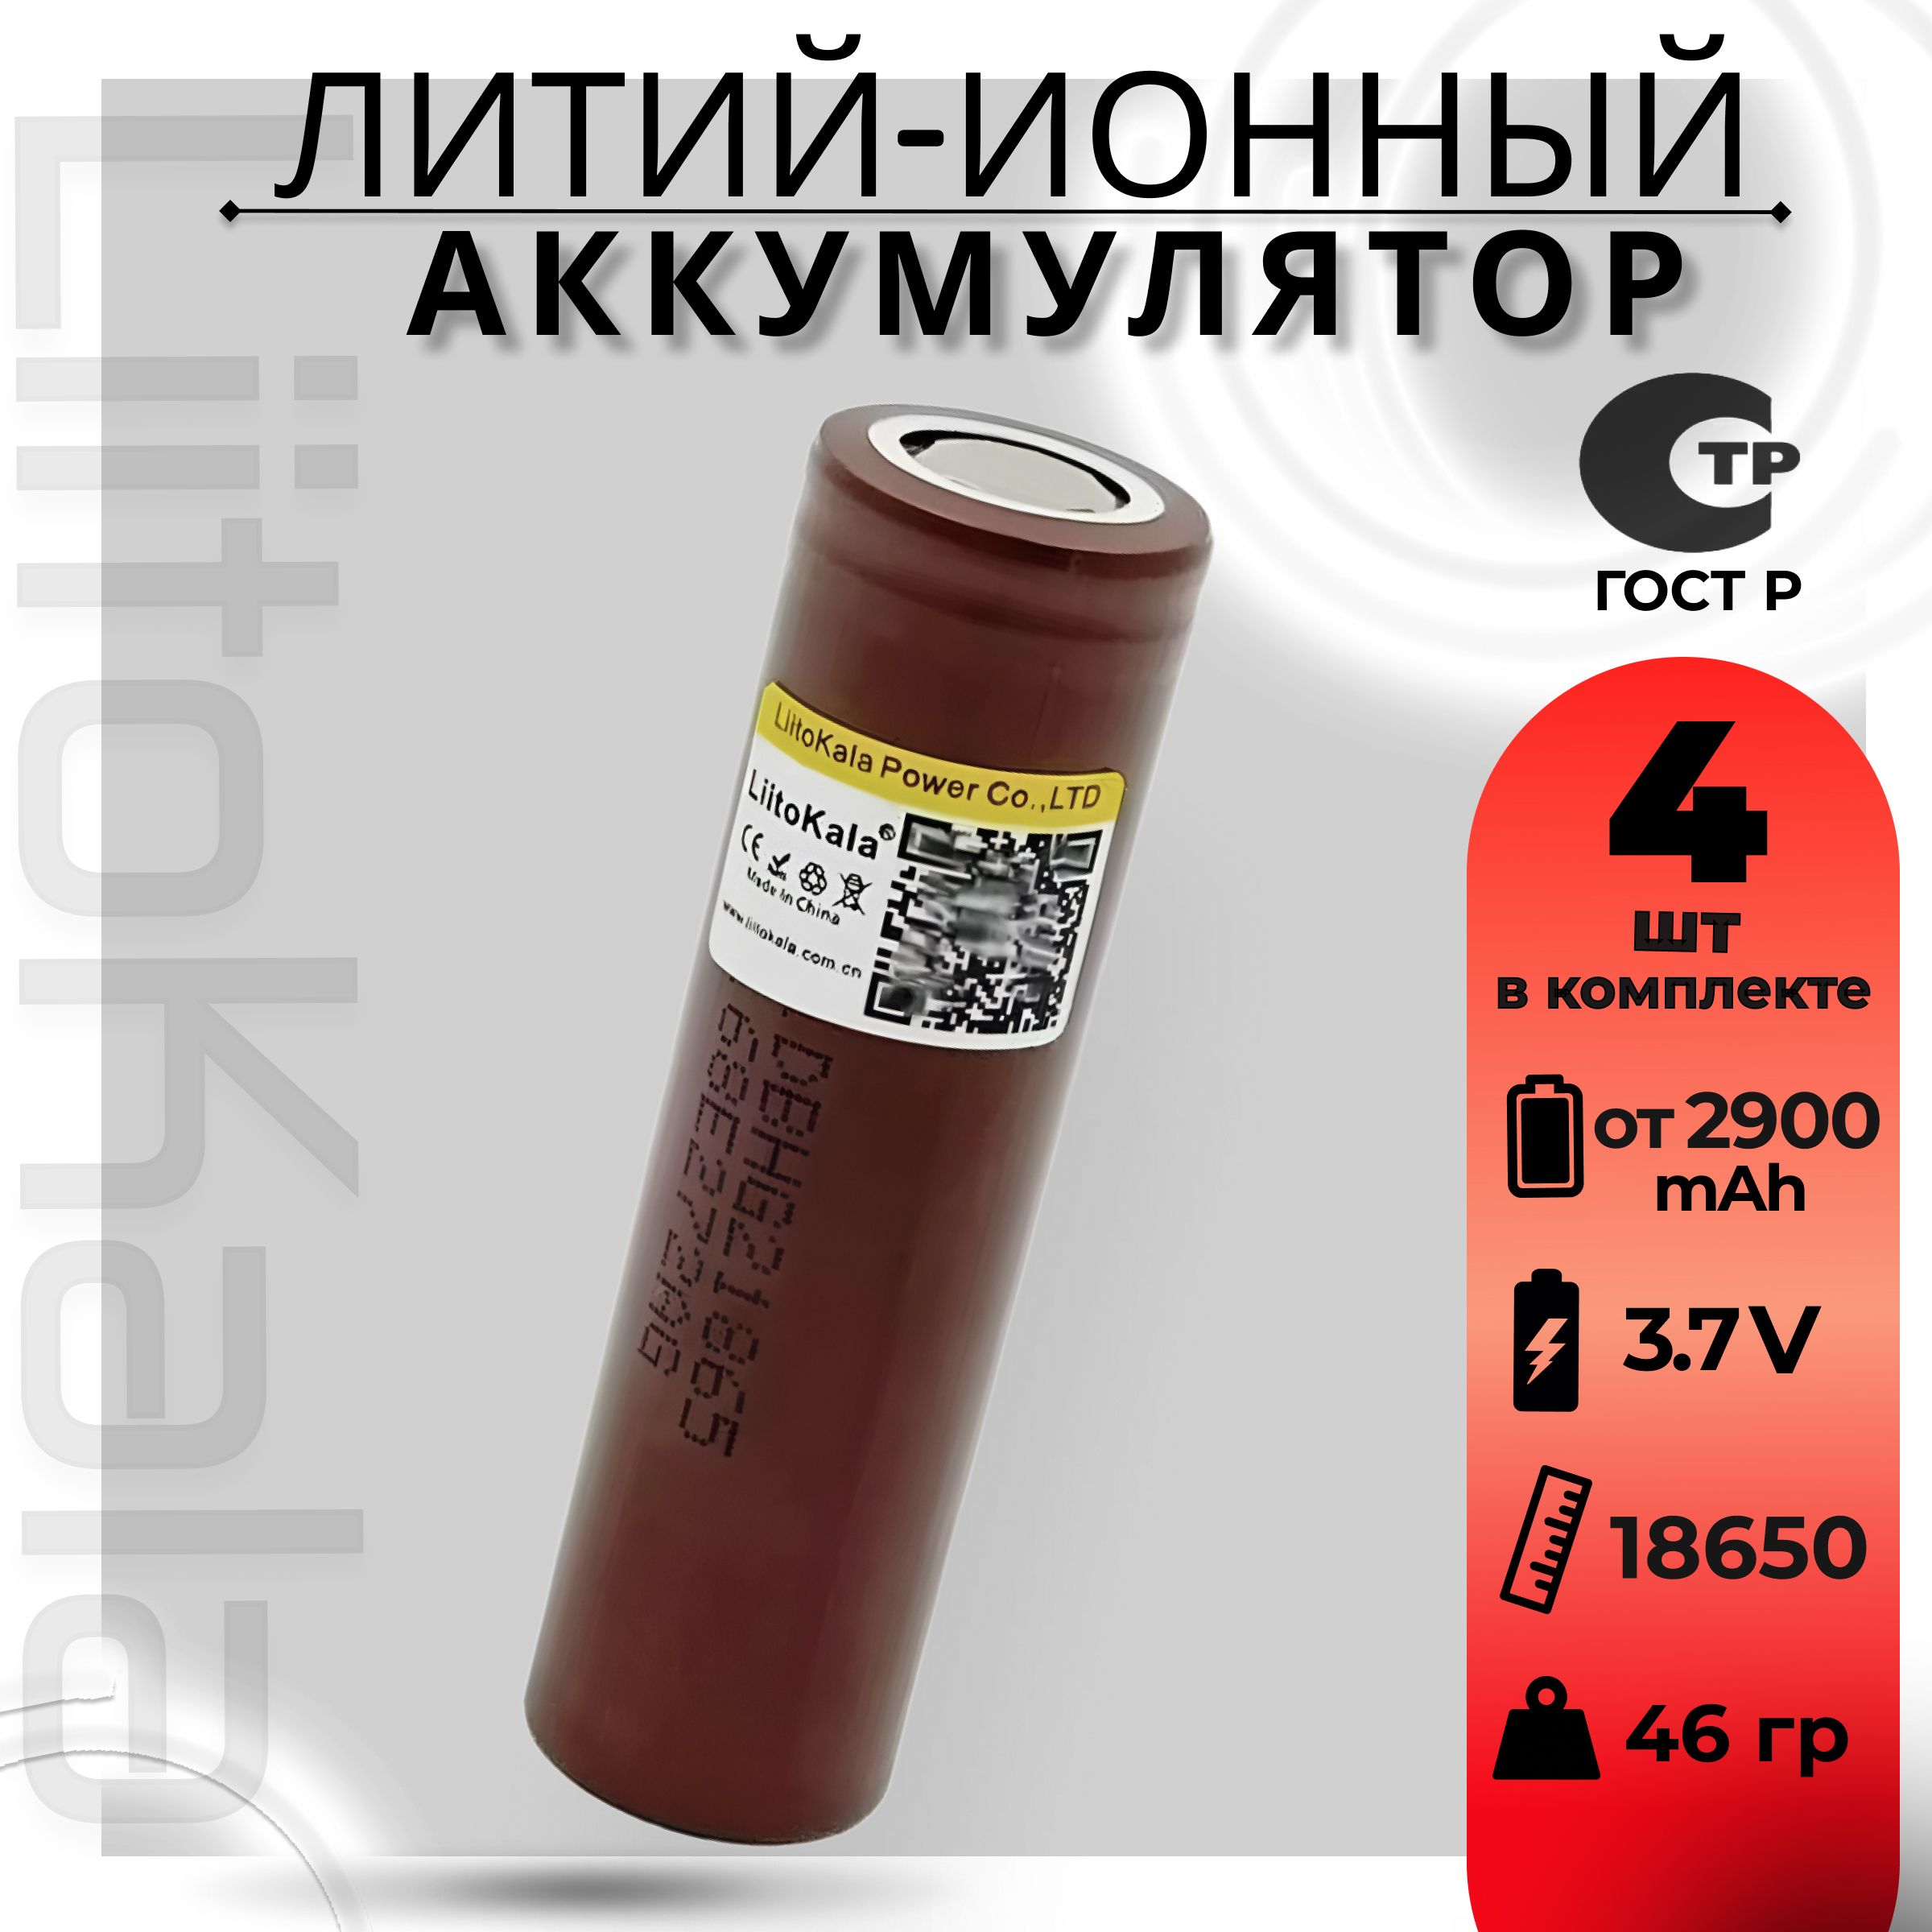 Аккумулятор18650высокотоковыйот2900mAhLiitoKalaHG2,Li-ion,до20A/дляэлектронныхсигарет,шуруповертовиэлектроинструмента,4шт.